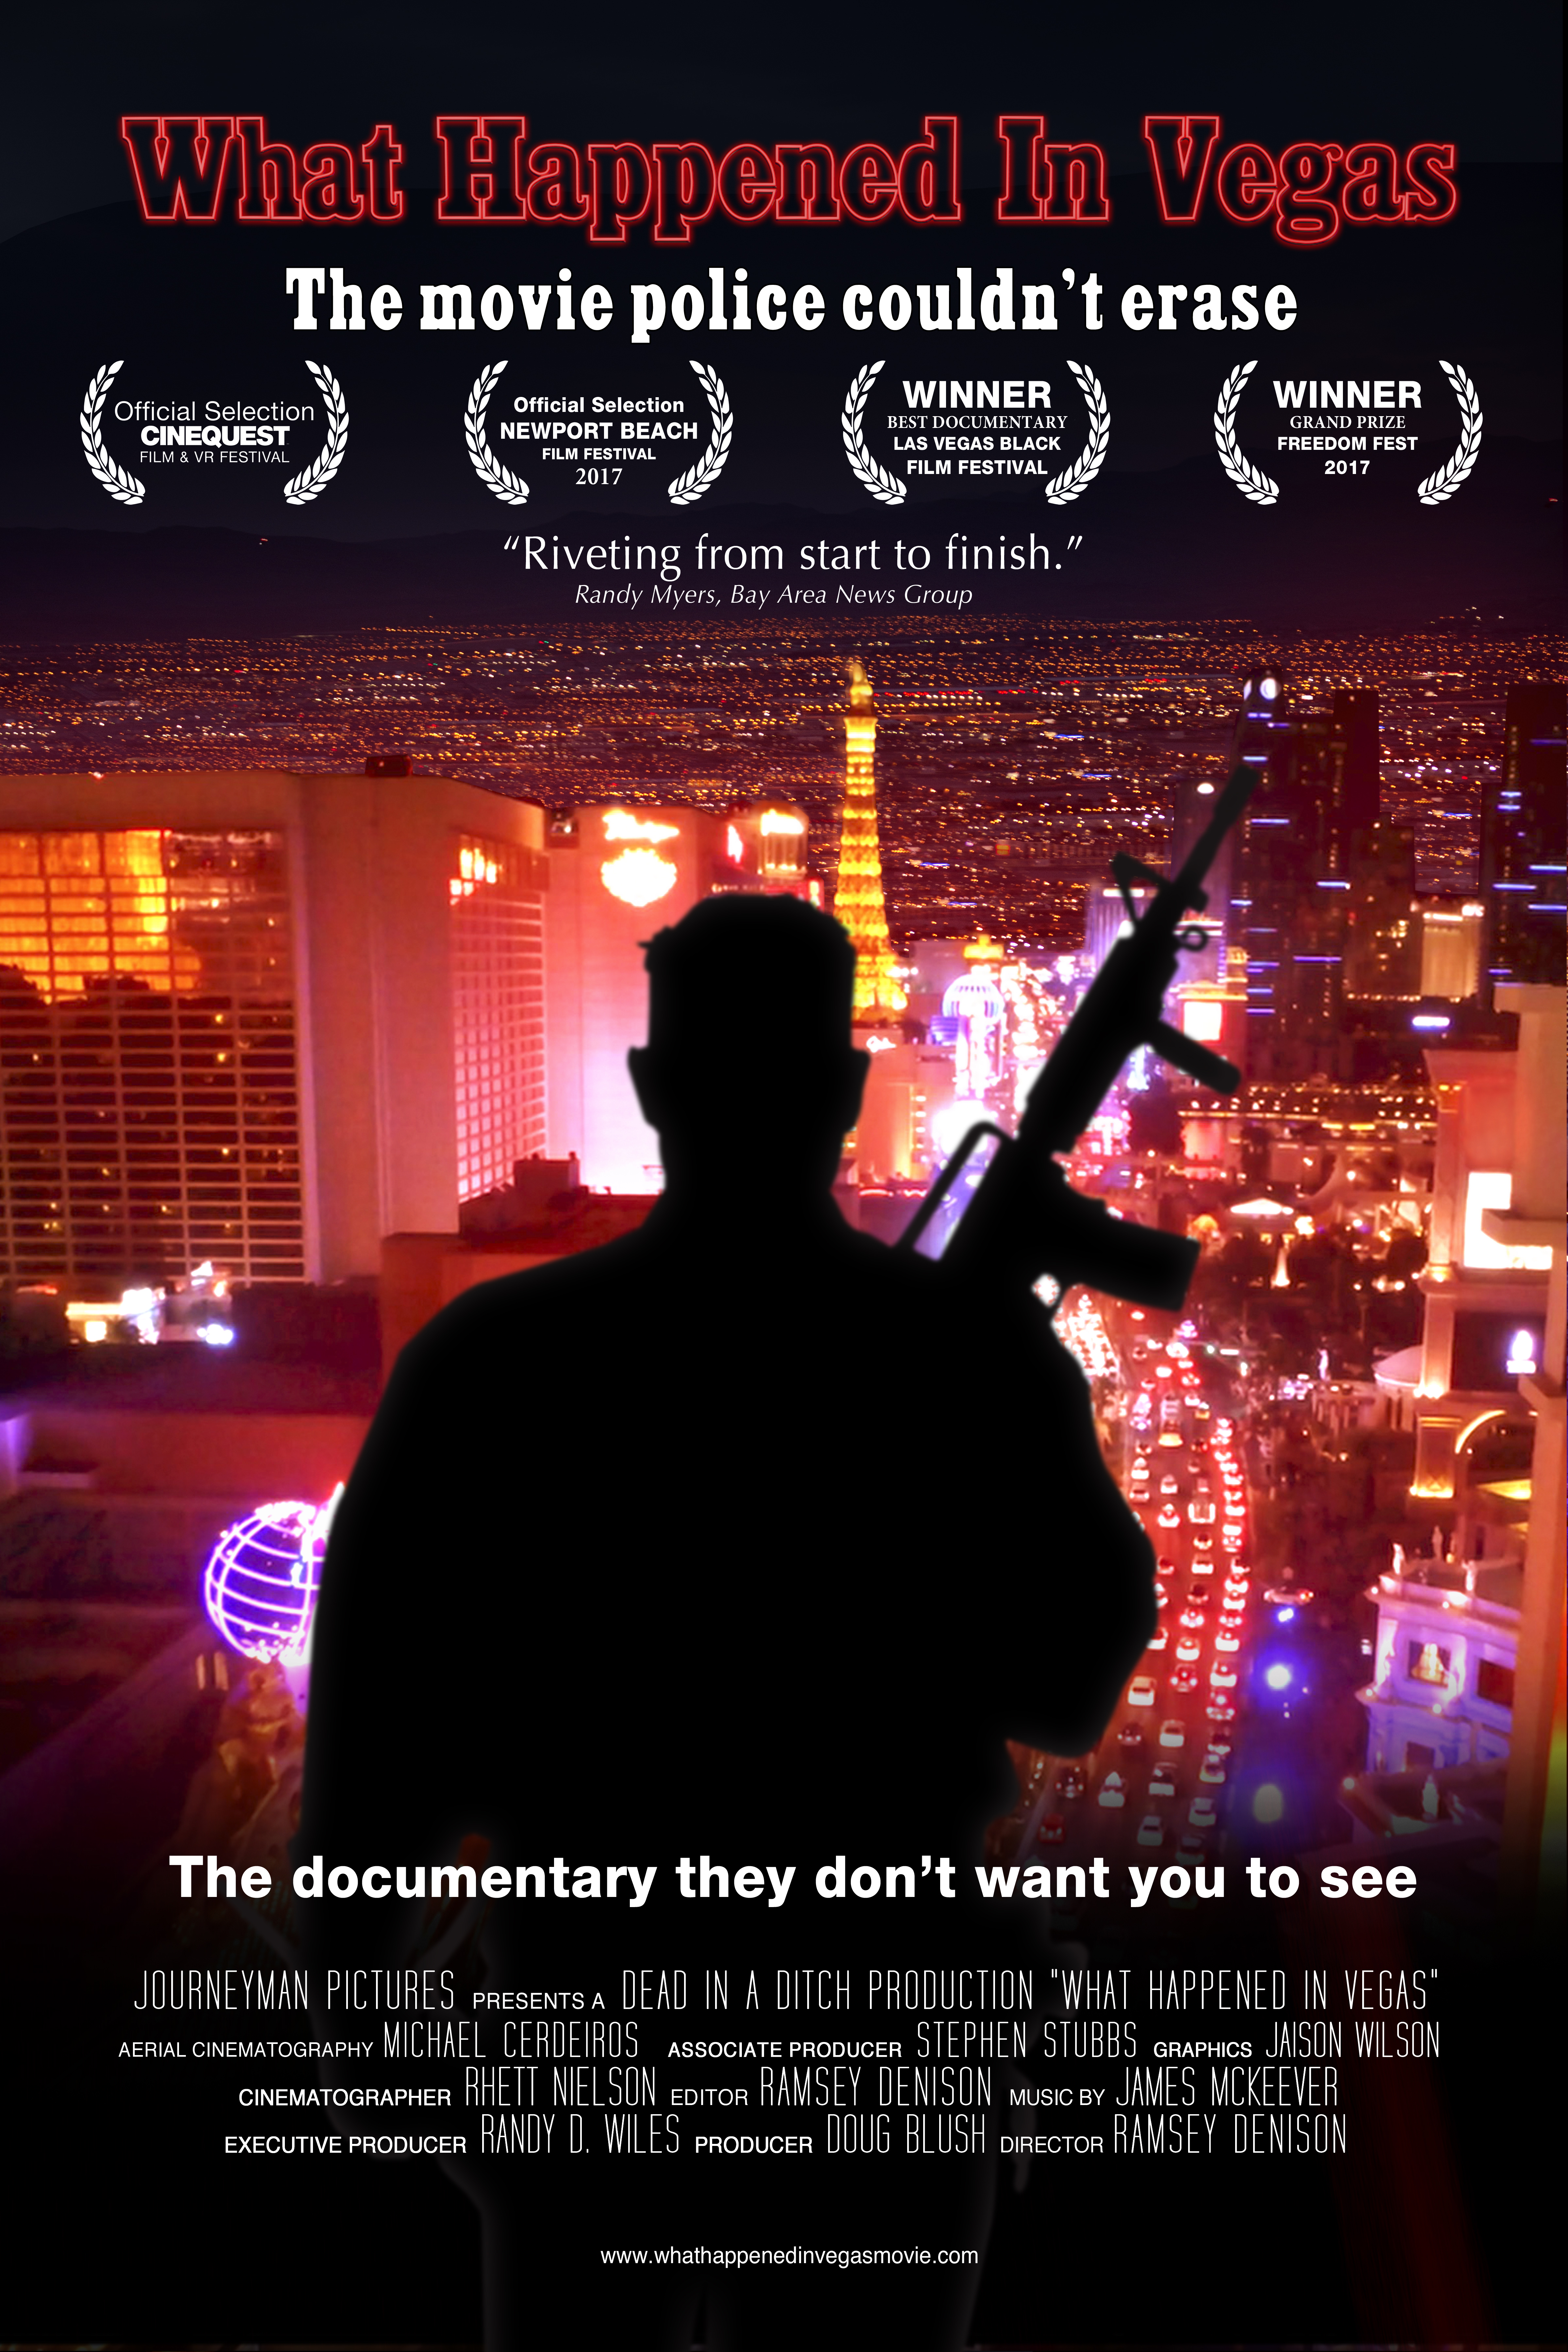 Nonton film What Happened in Vegas layarkaca21 indoxx1 ganool online streaming terbaru